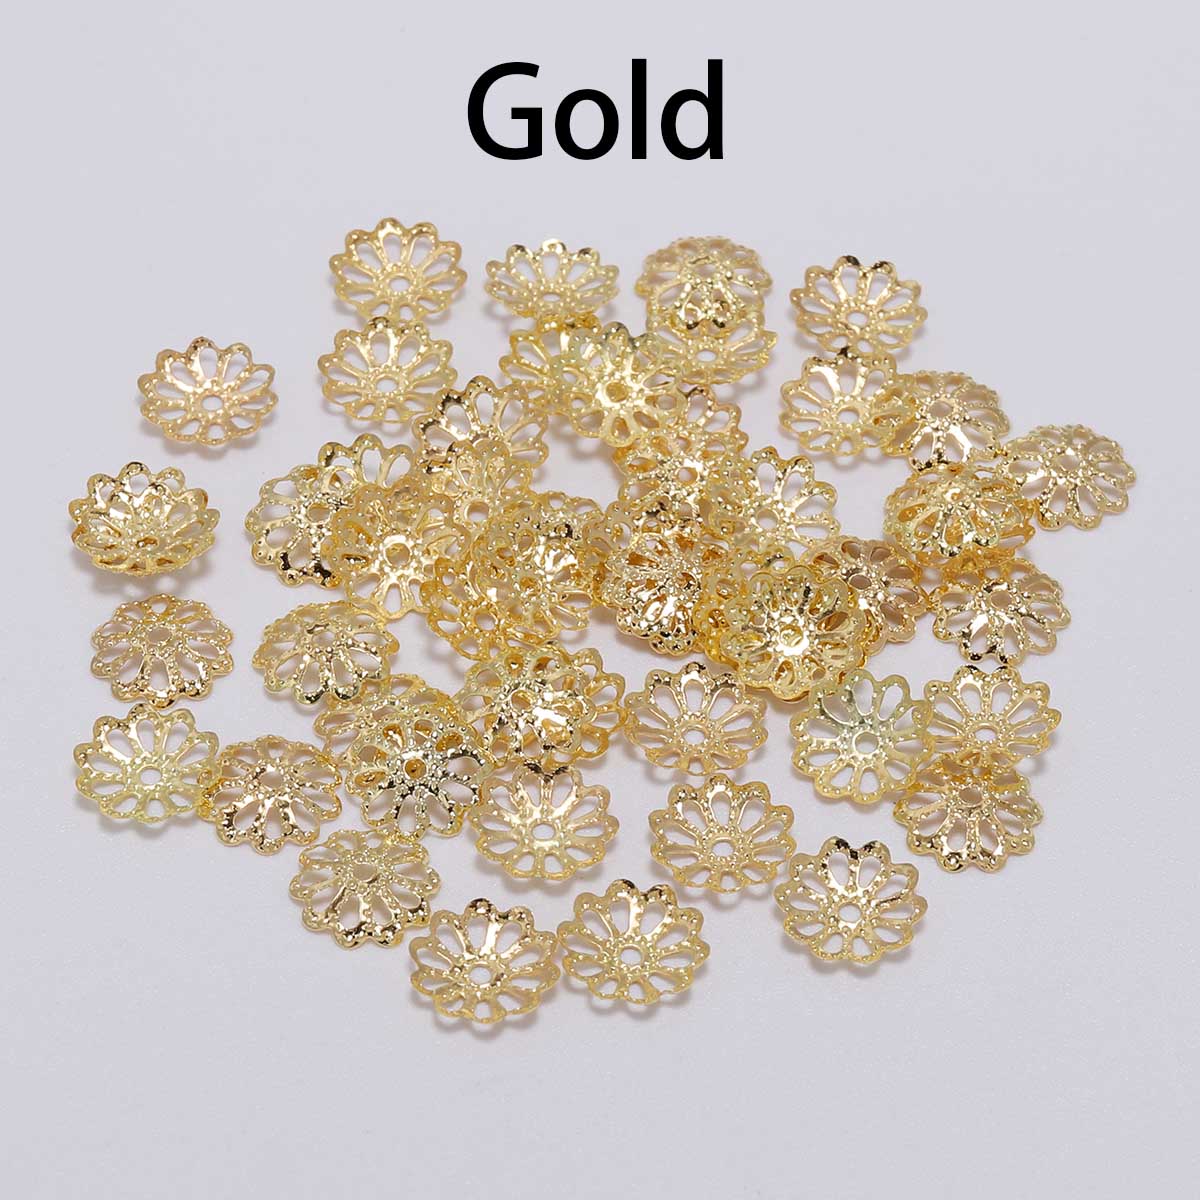 7, 9mm Gold Flower Petal Bead Caps, 200pcs